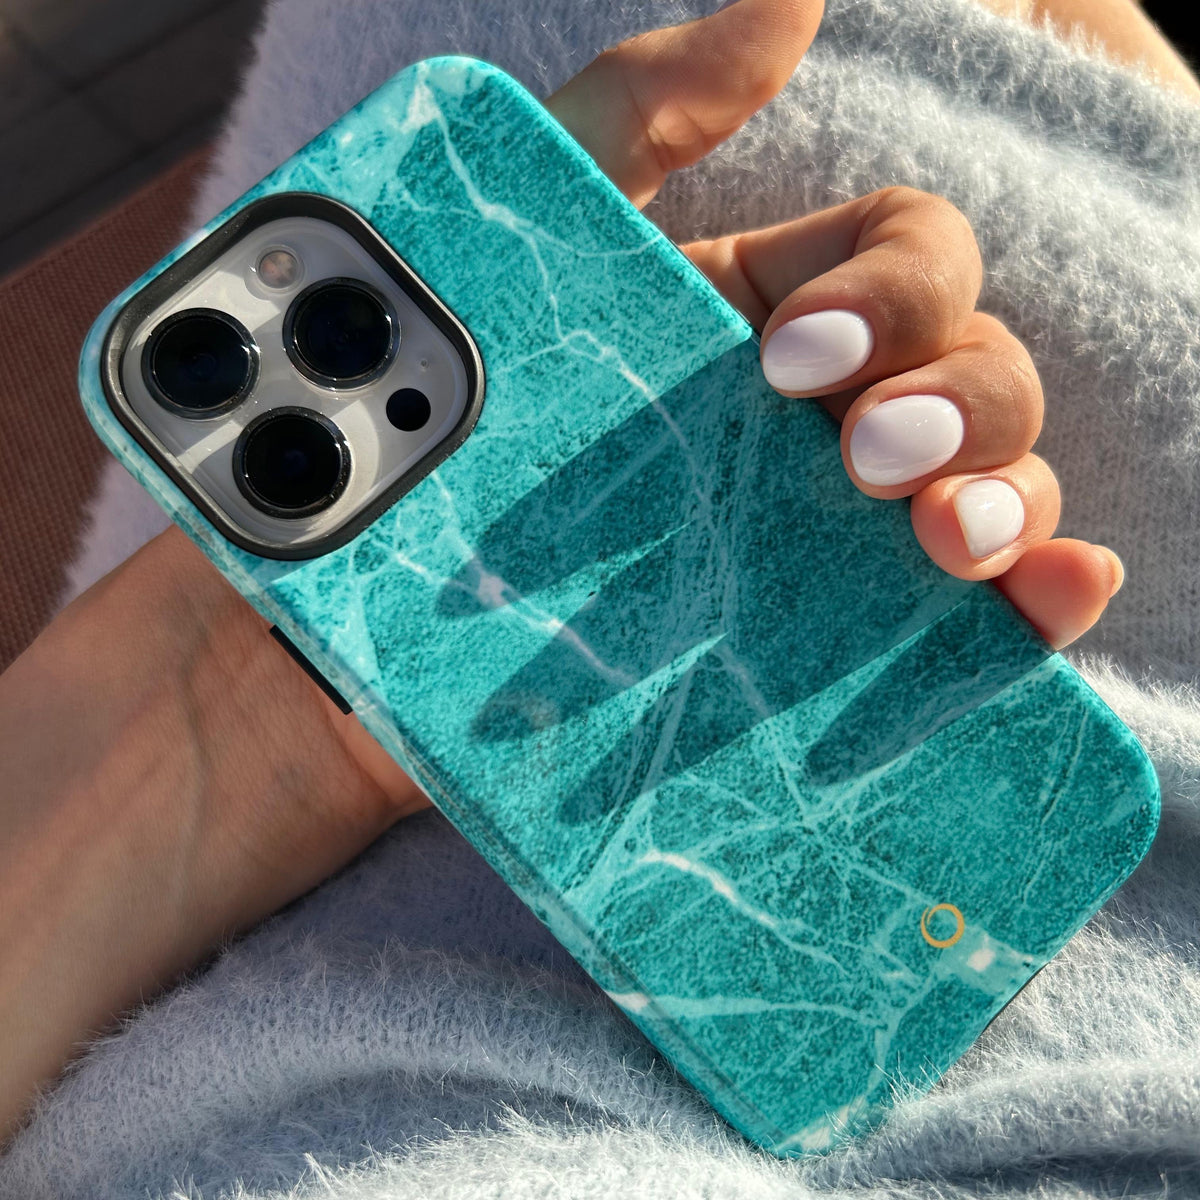 Ocean Blue Marble iPhone 11 Case